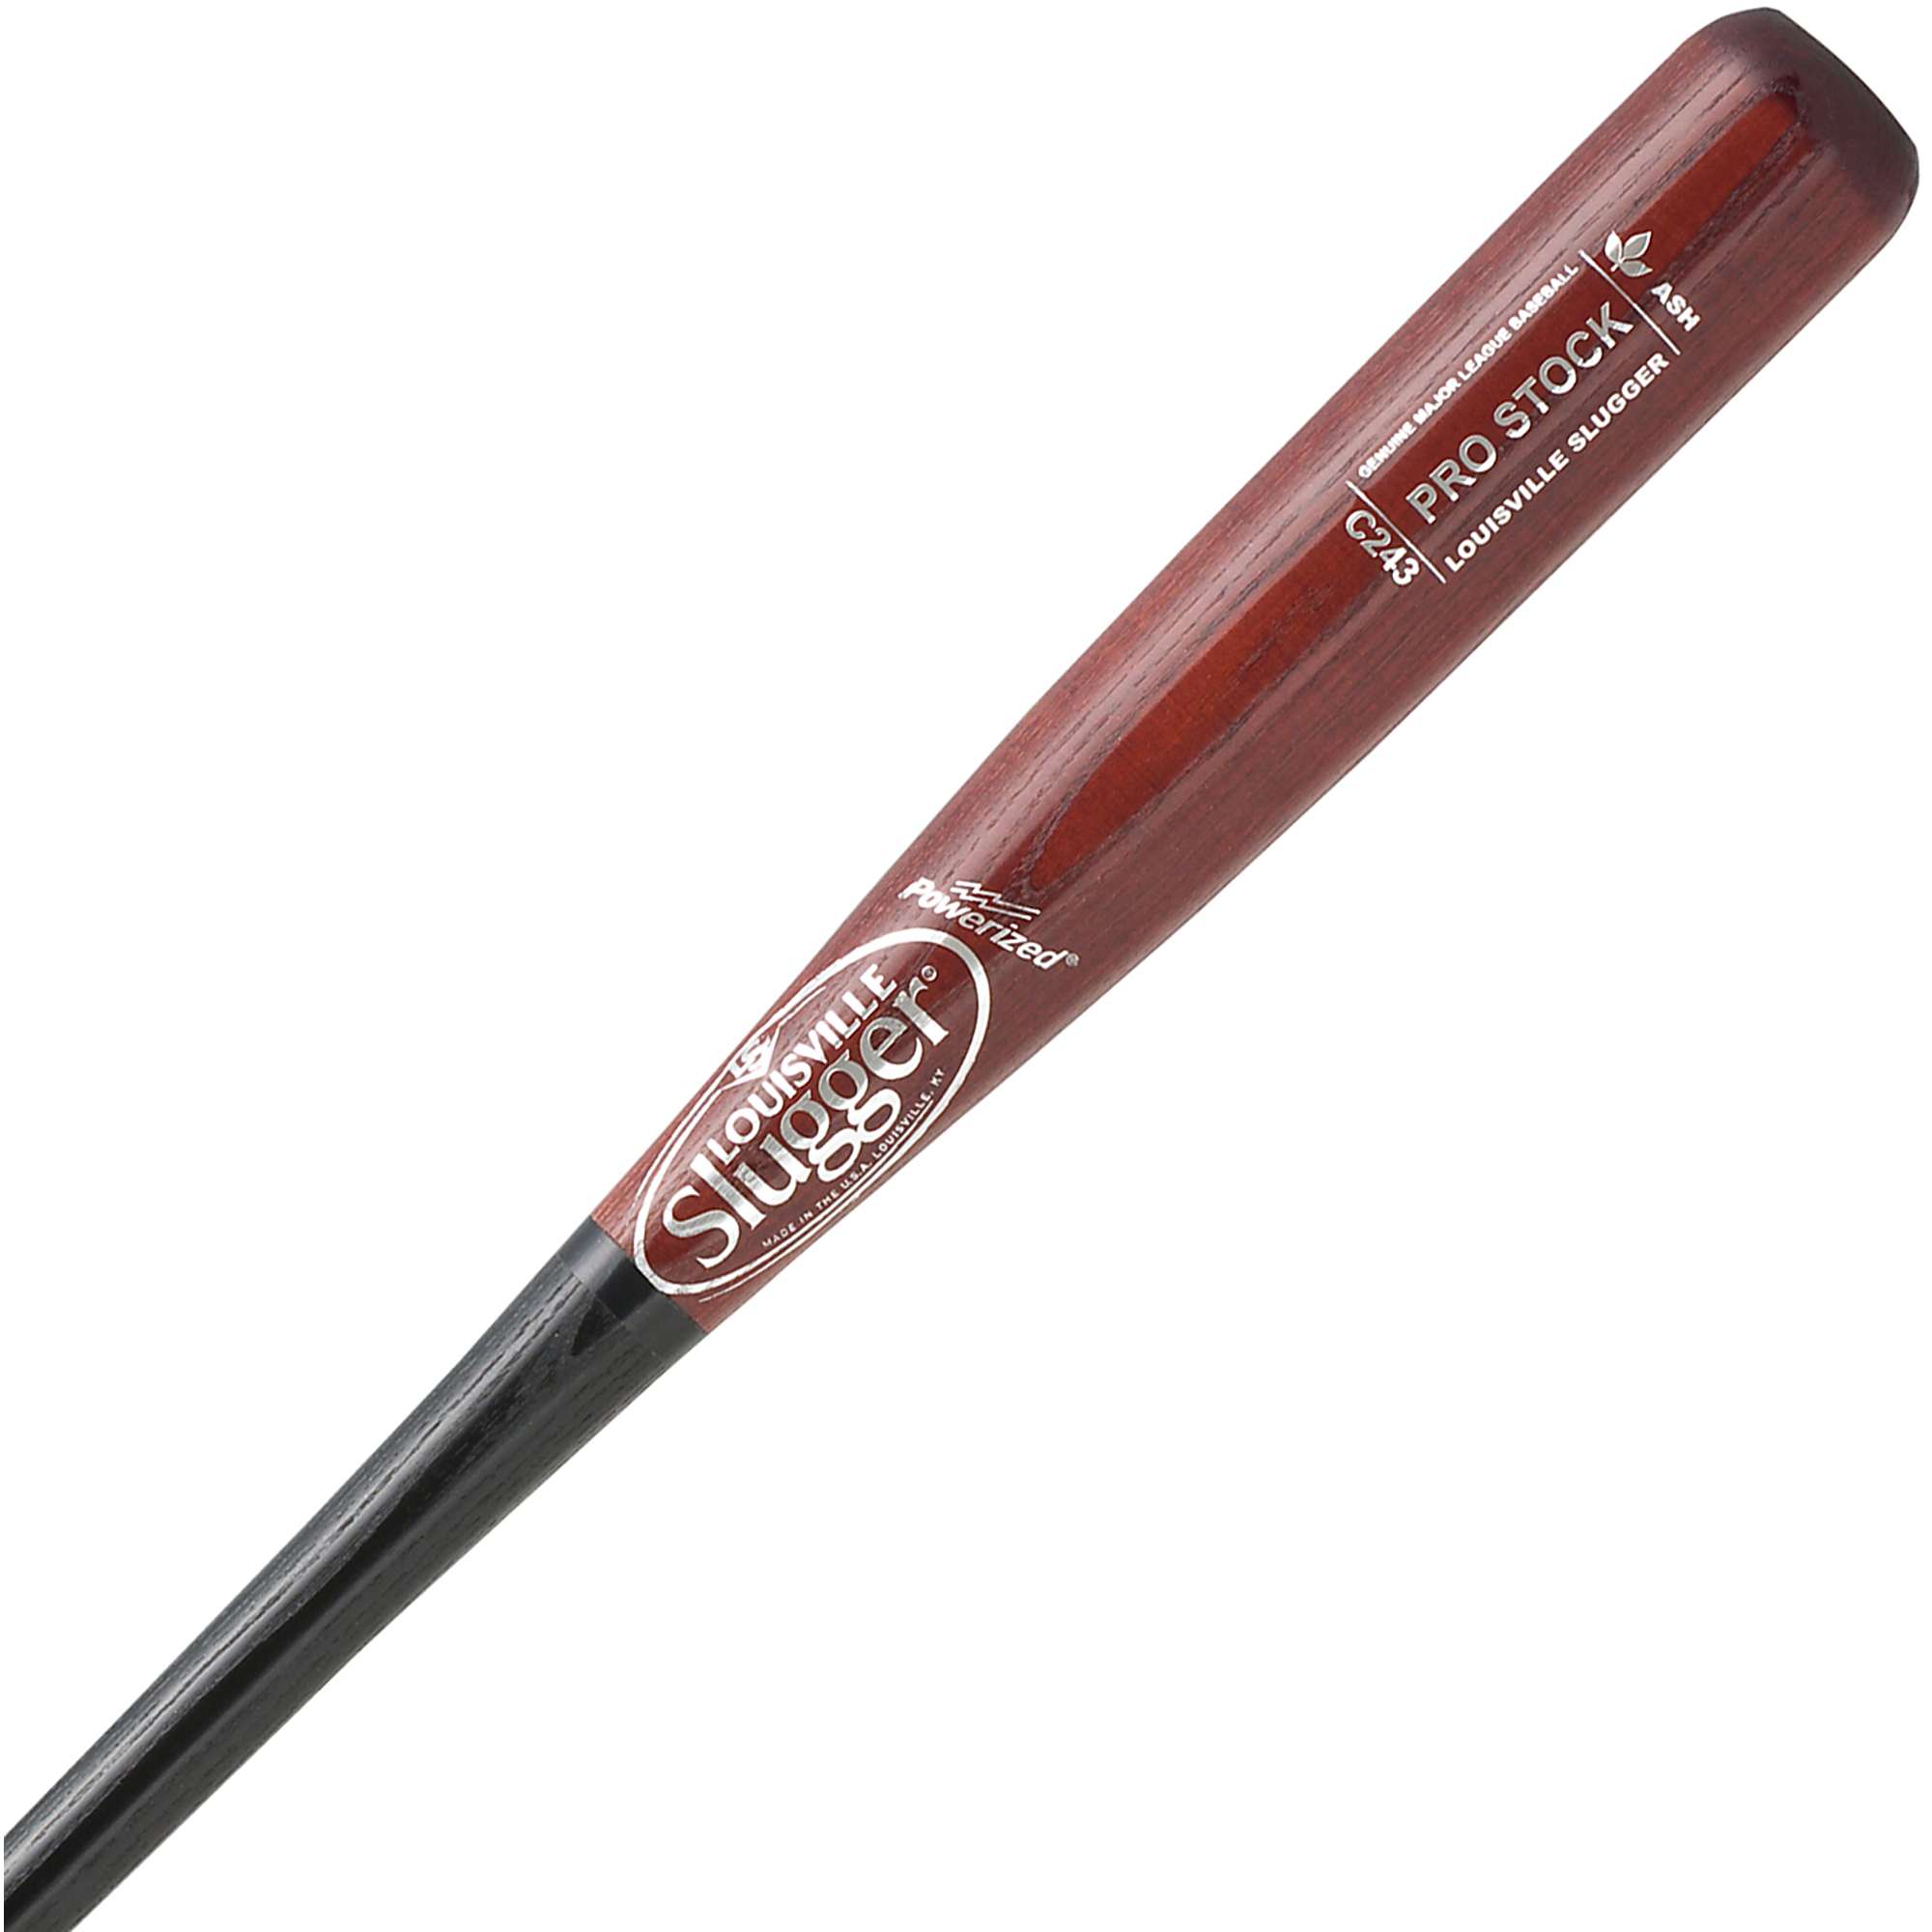 Louisville Slugger Pro Stock Ash Wood Baseball Bats | eBay